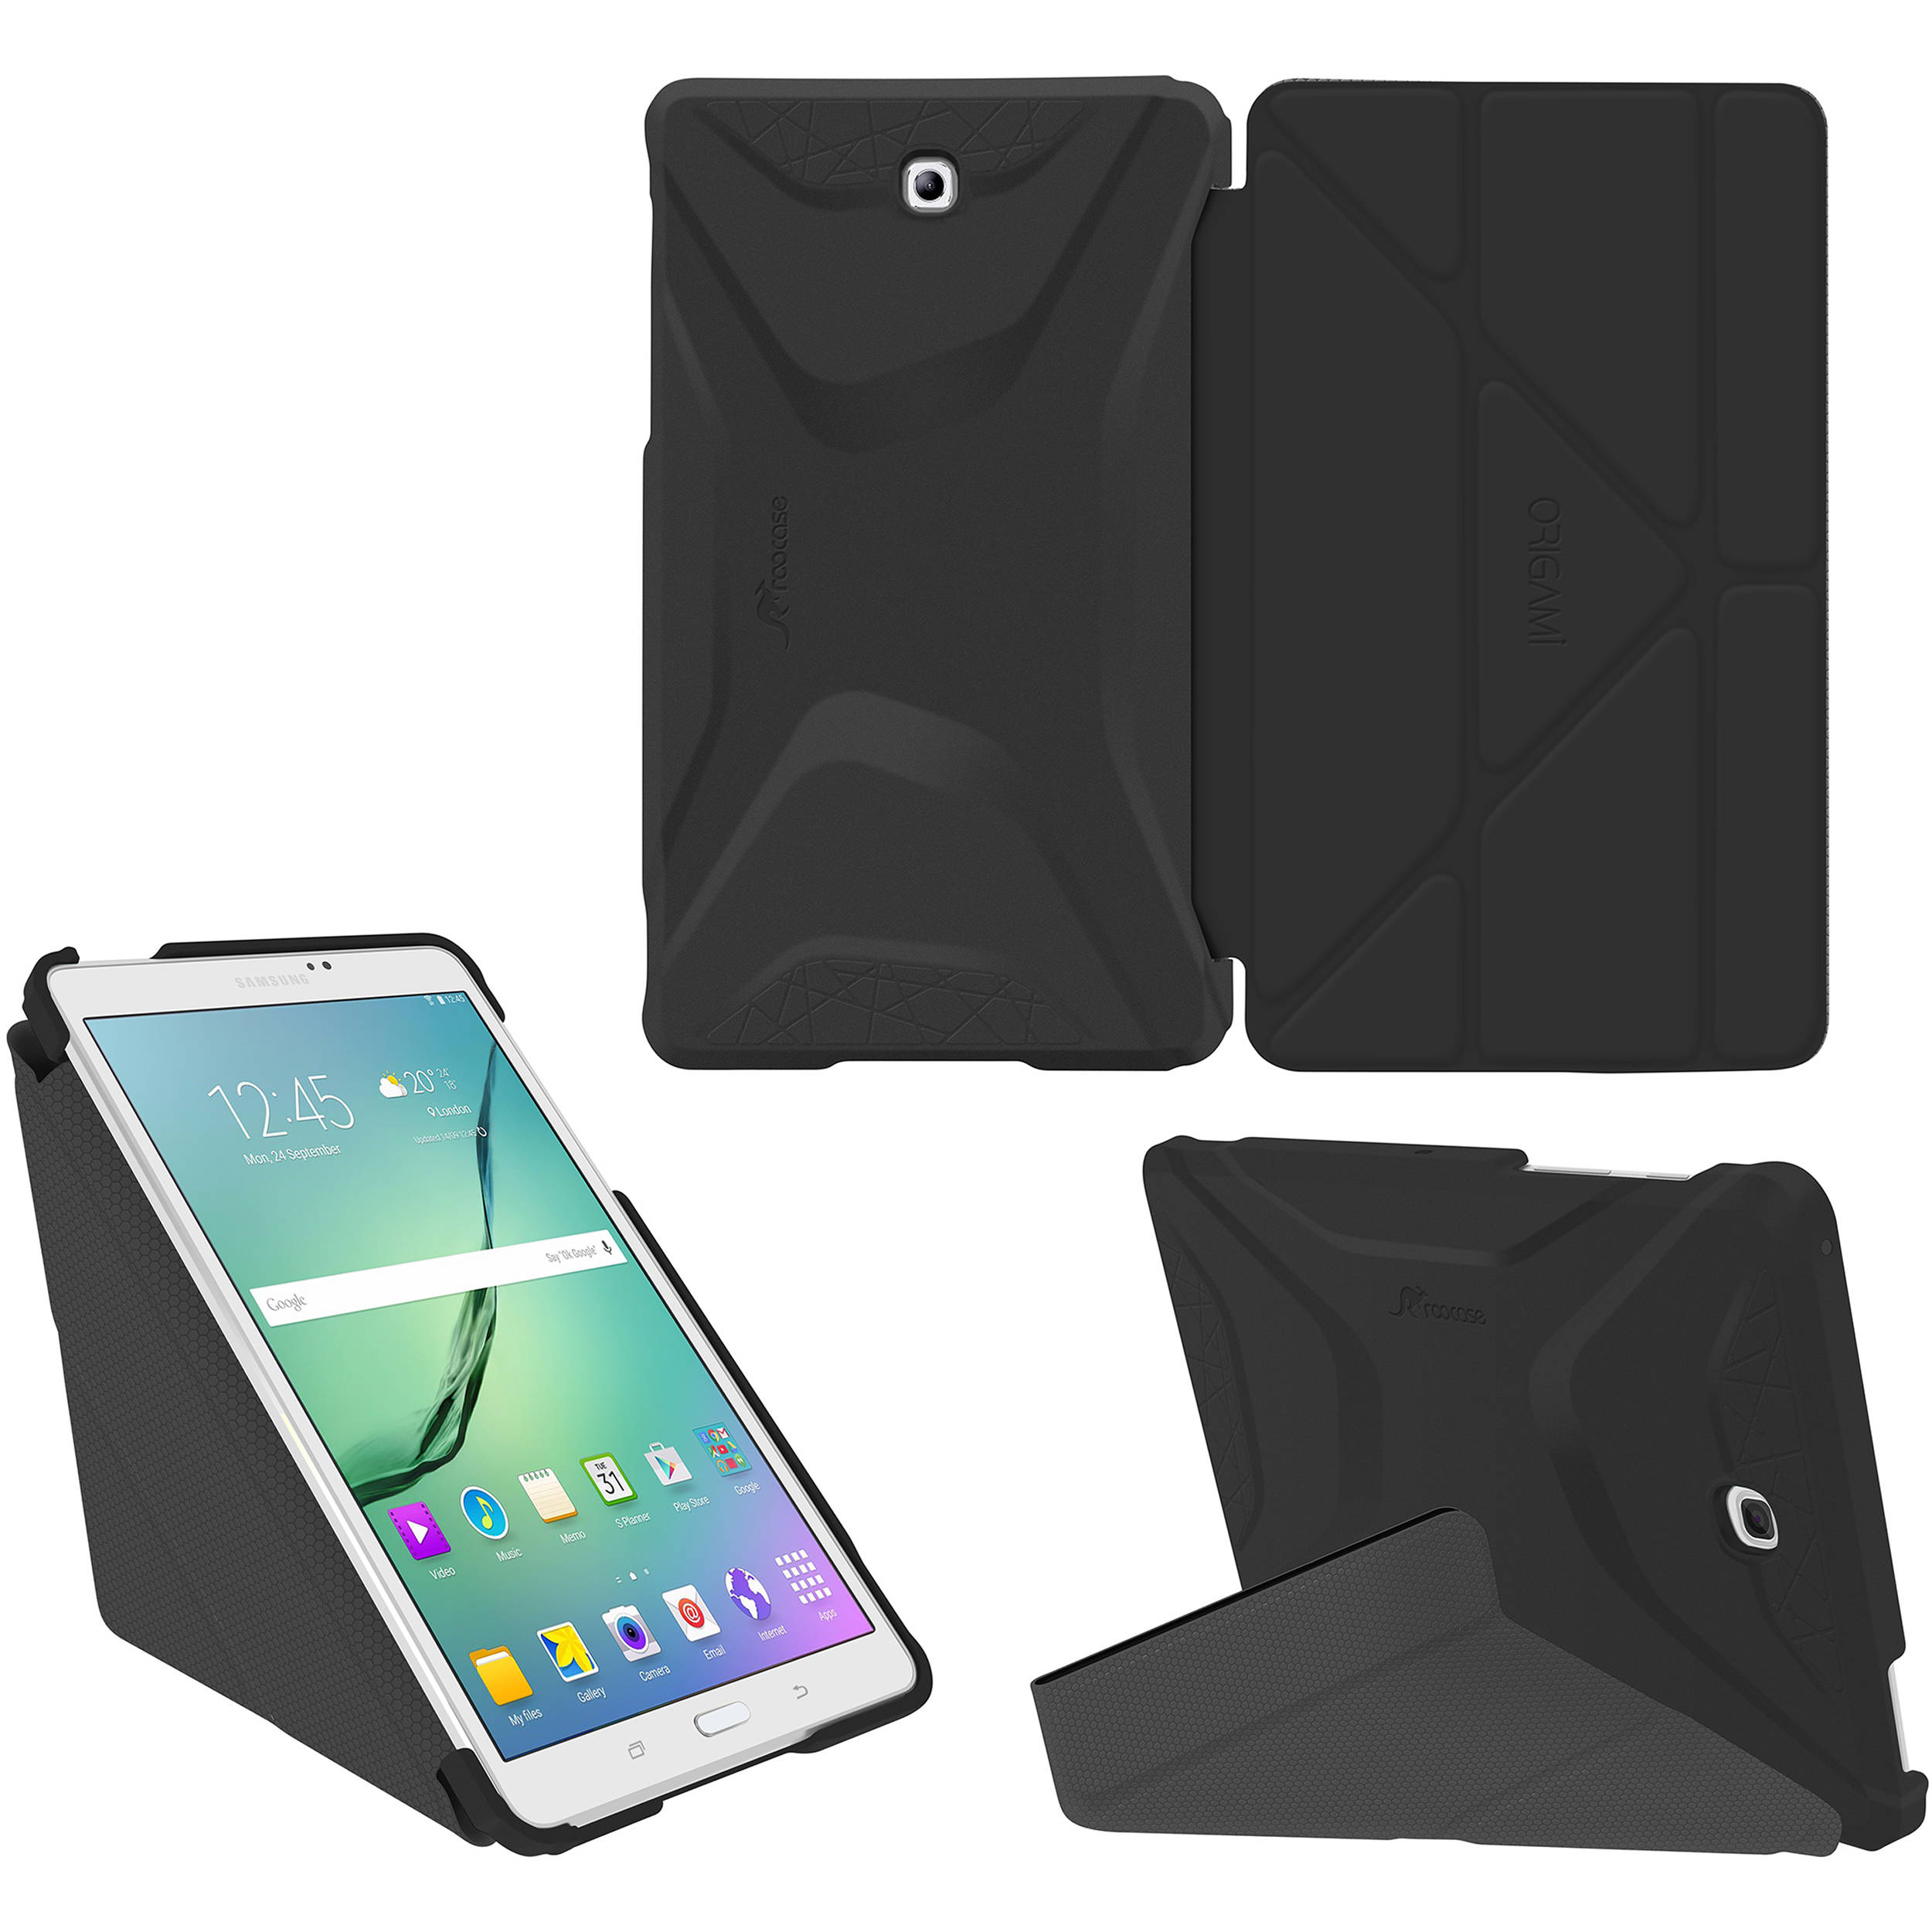 Origami Tablet Case Roocase Origami 3d Case For Samsung Galaxy Tab S2 97 Granite Black Gunmetal Gray